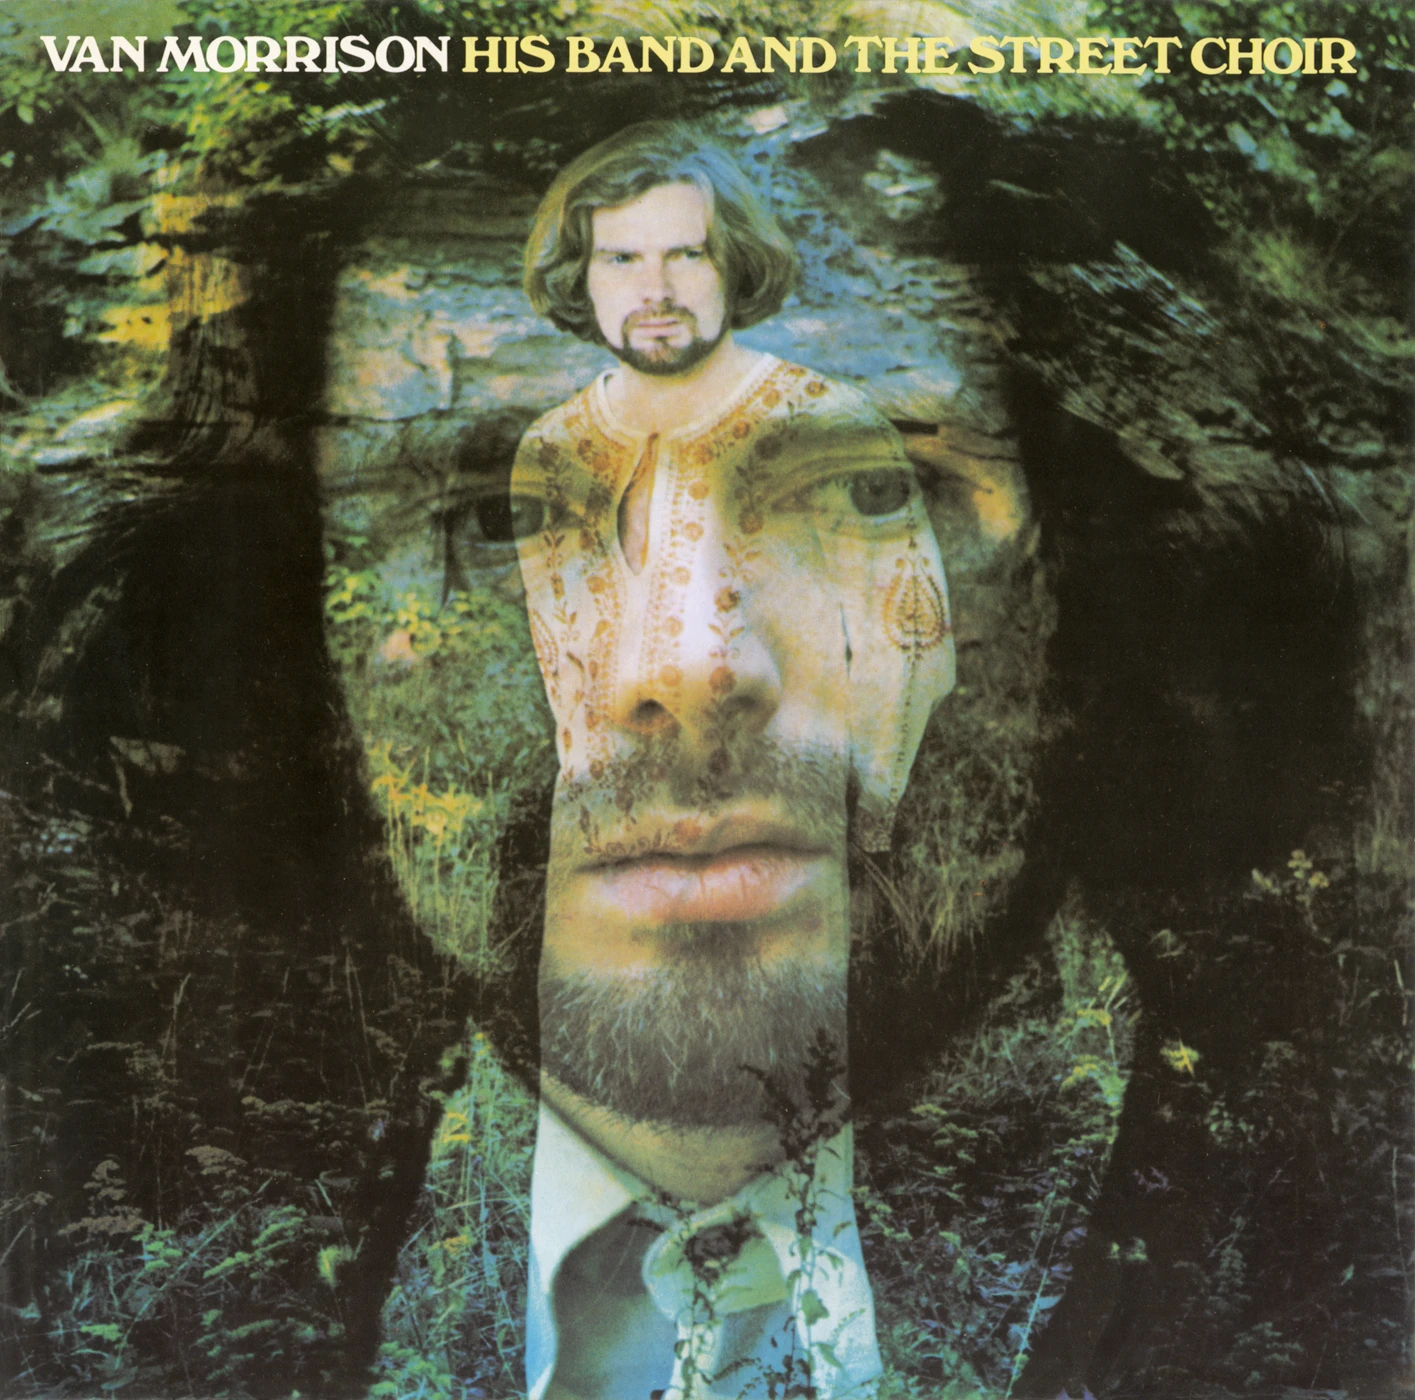 His Band And The Street Choir – Van Morrison